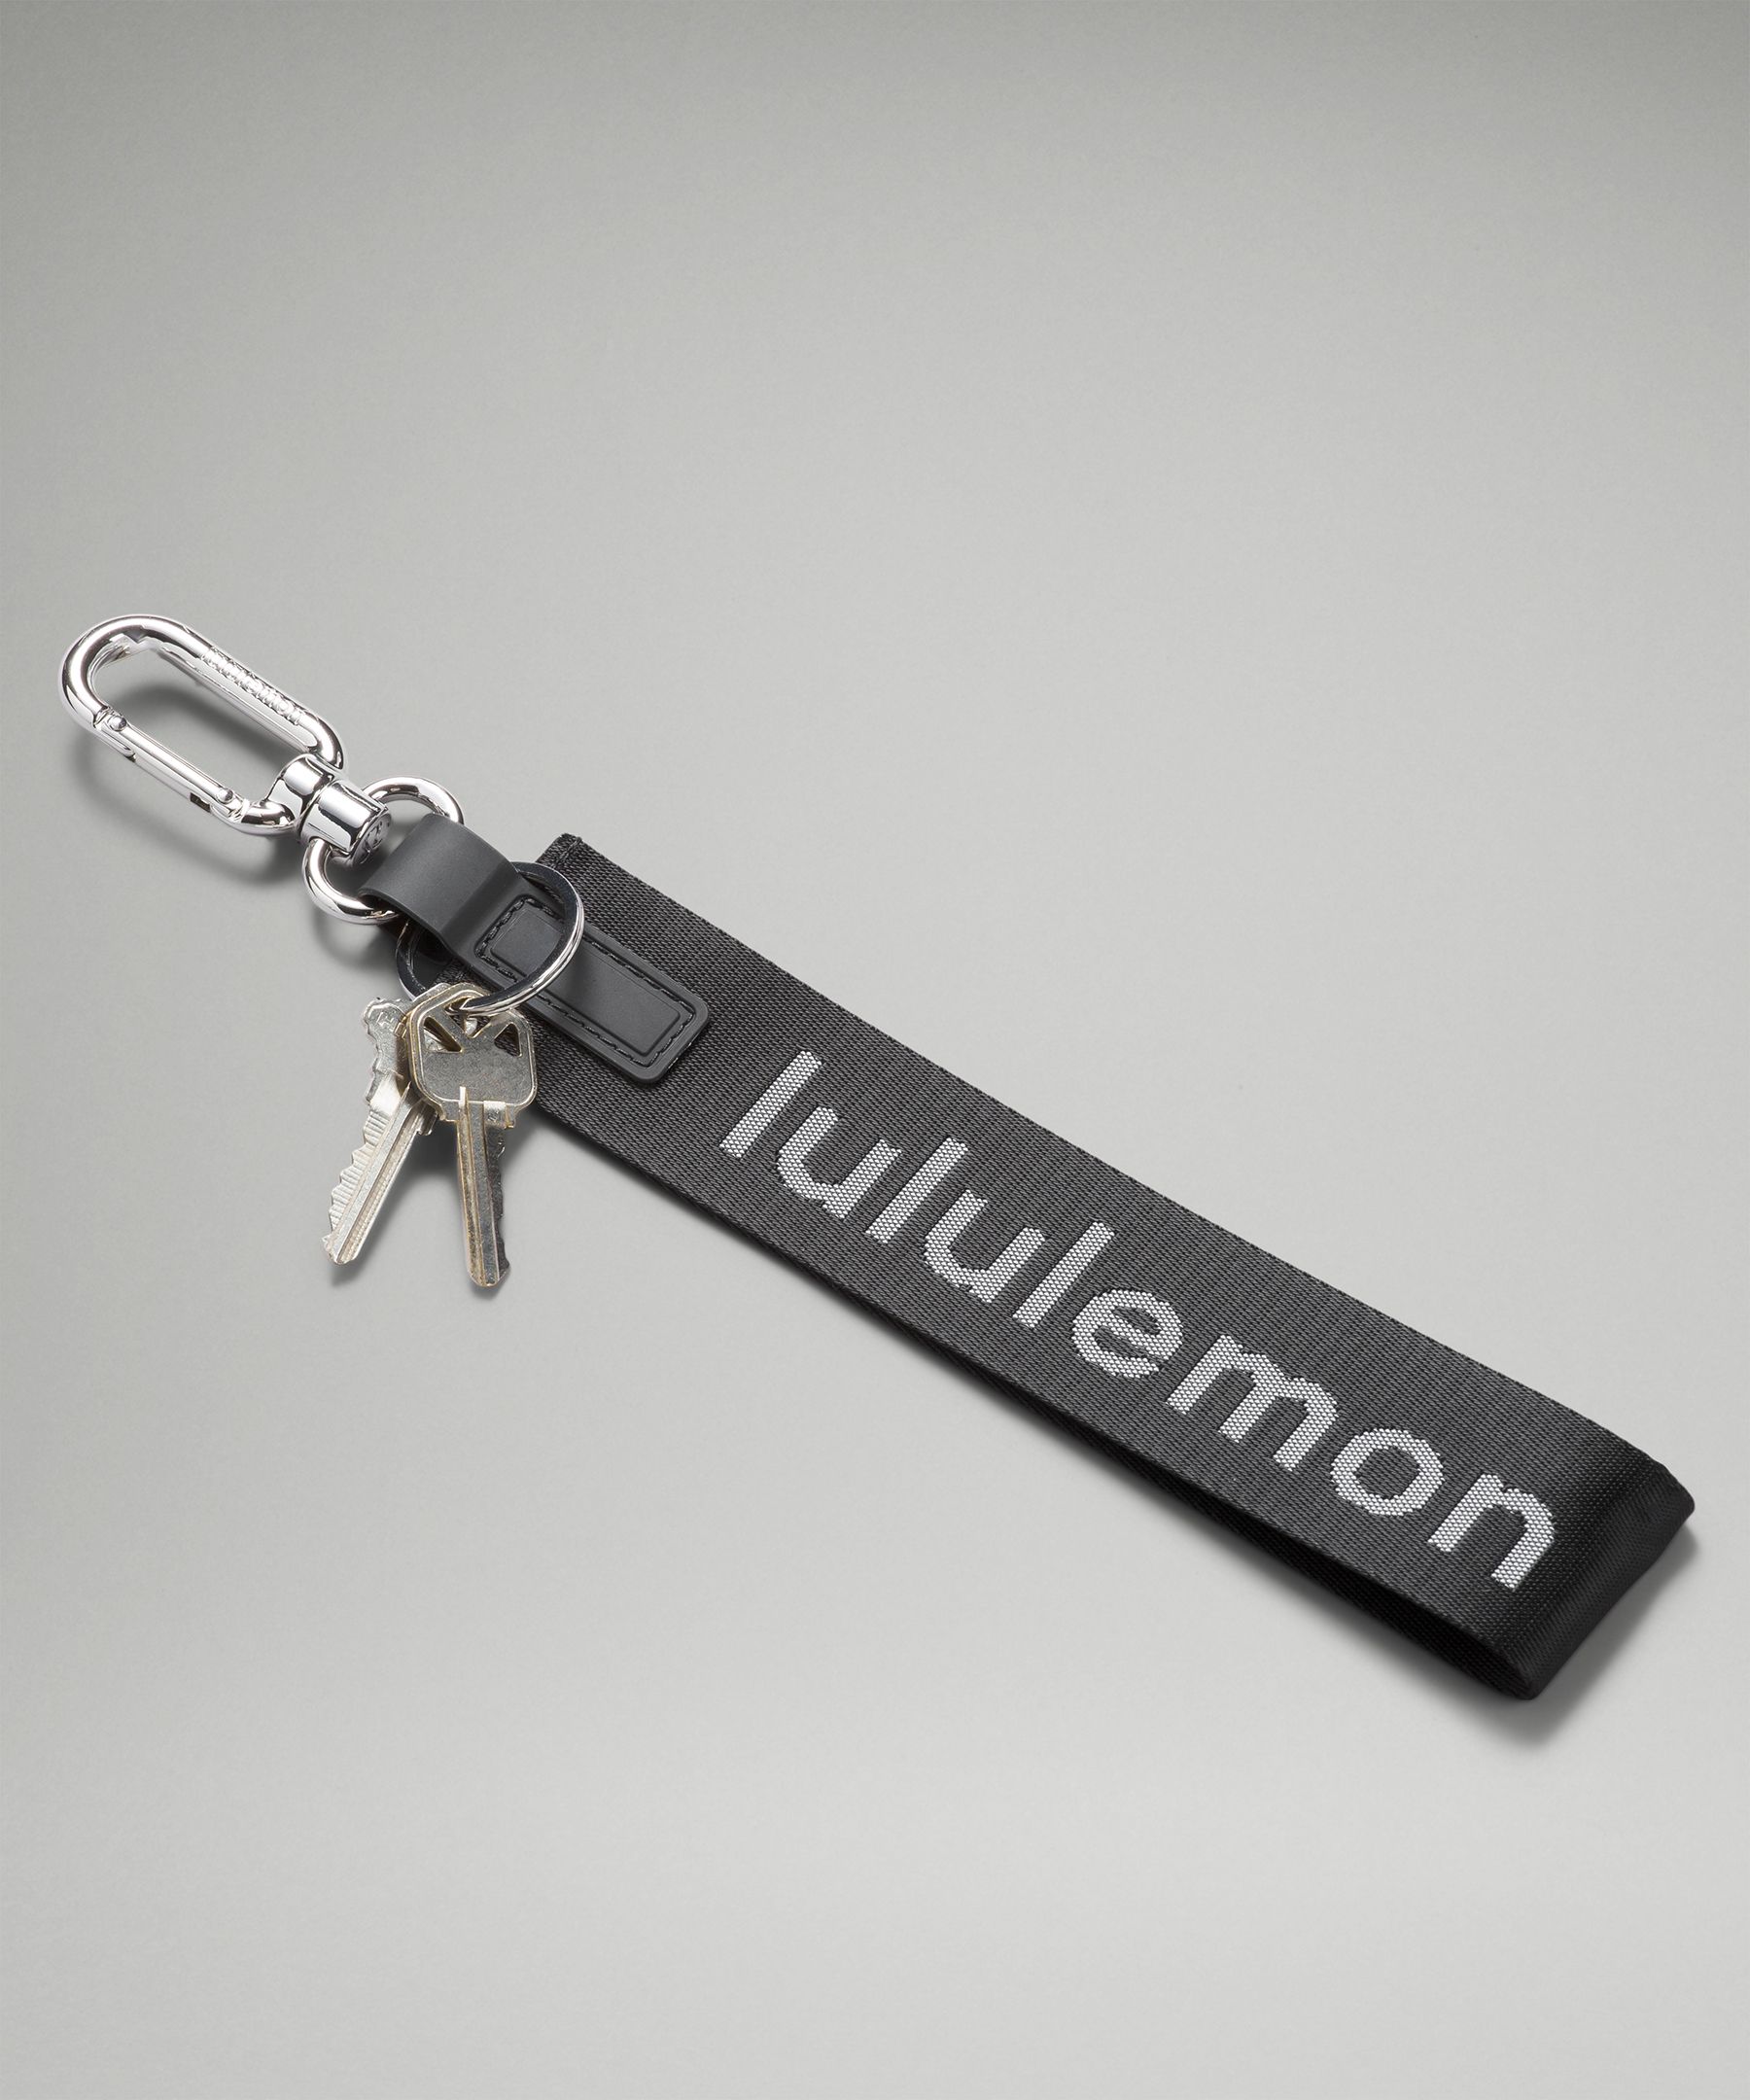 Lululemon Never Lost Key Chain 9 (Black/Super Dark), Black